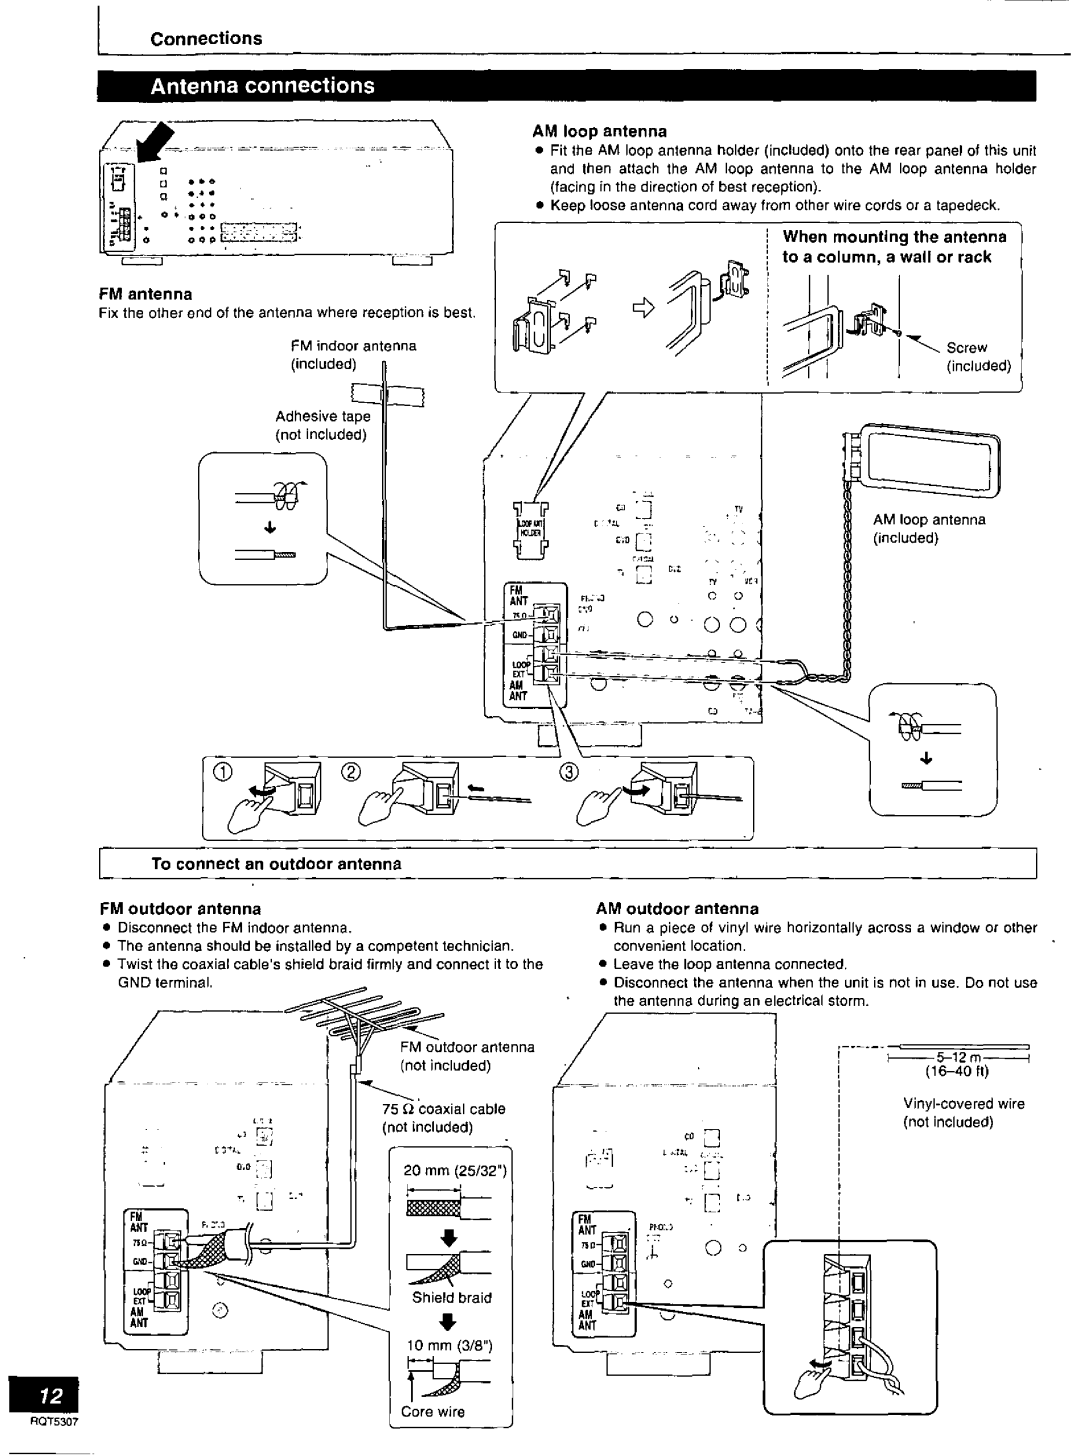 Panasonic SC-HT280, SC-HT275 manual 